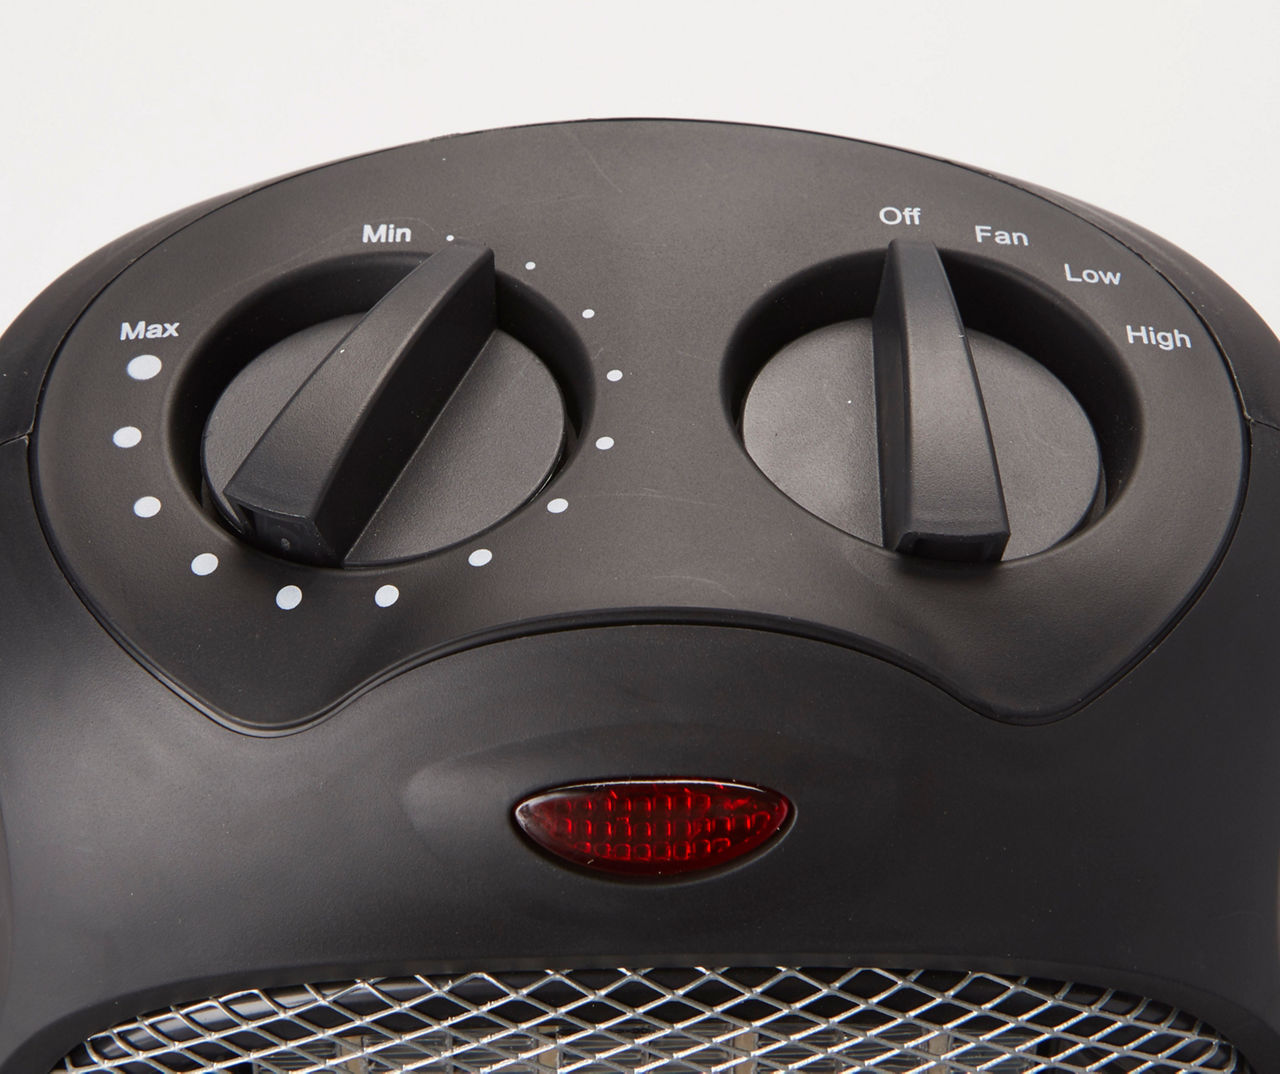 Black + Decker 2000 Watts Ceramic Room Heater With Digital Control- Black -  Velan Store